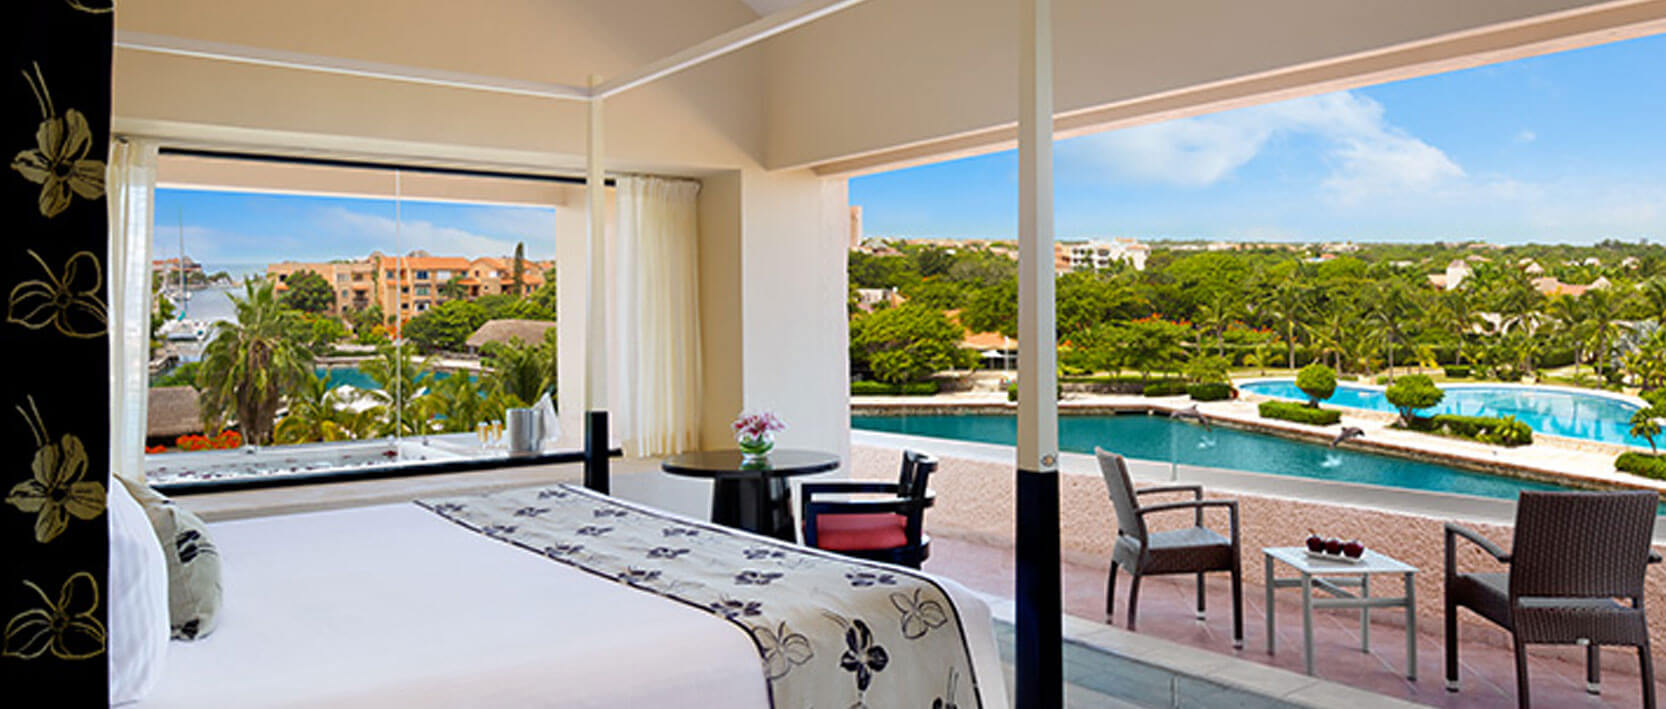 Dreams Puerto Aventuras Resort Accommodations - Honeymoon Jacuzzi Dolphin View